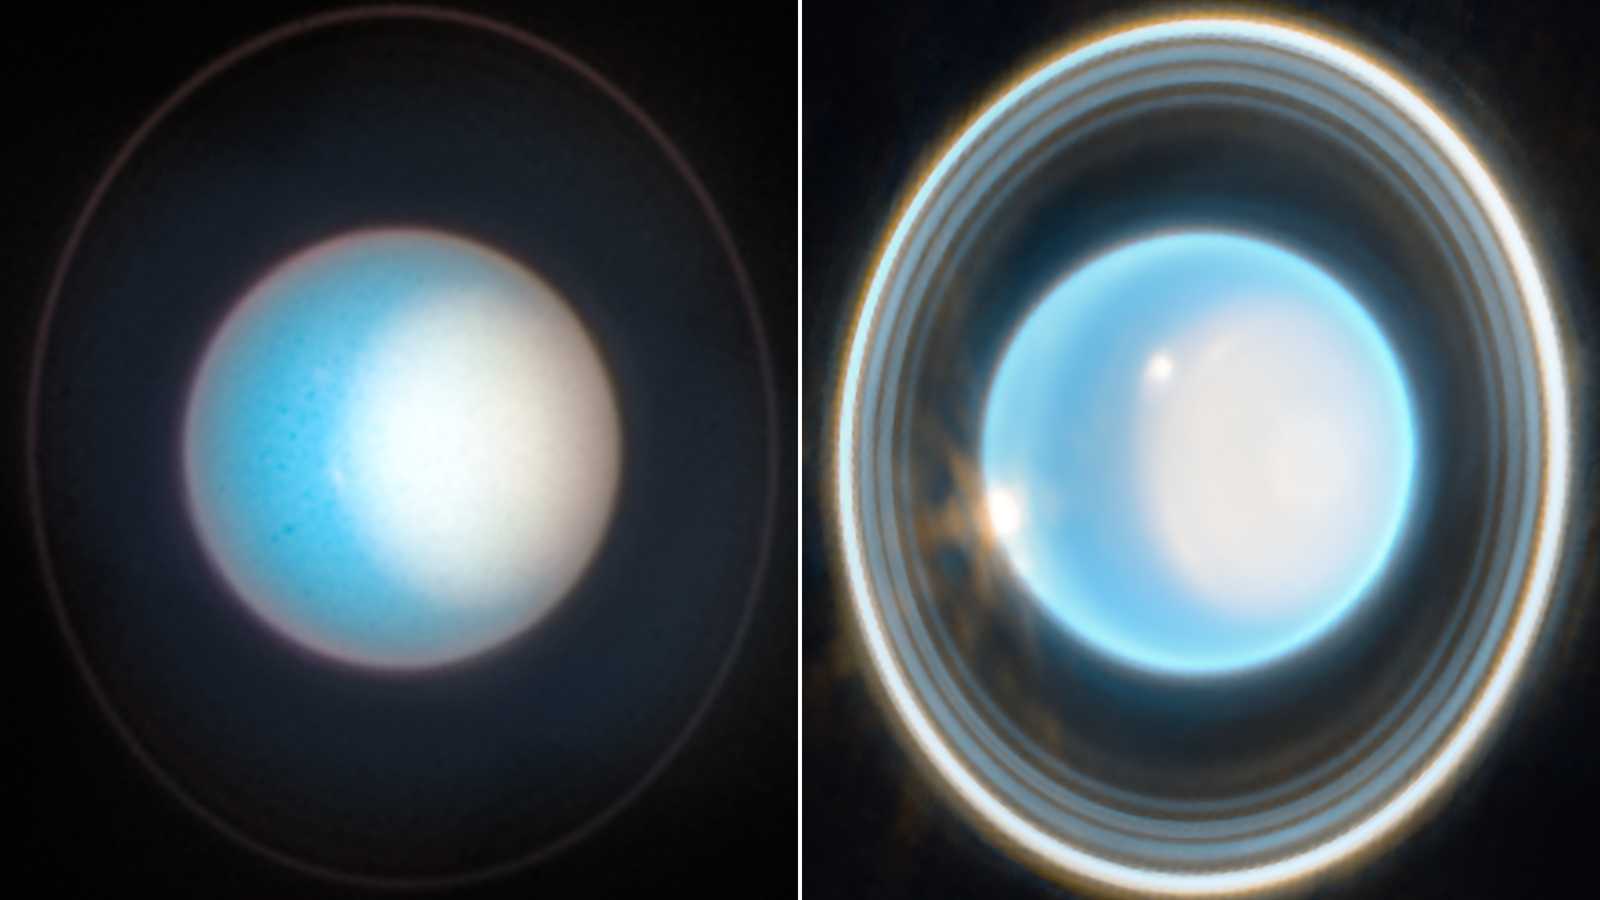 Uranus' elusive rings glow in new telescope heat view - CNET